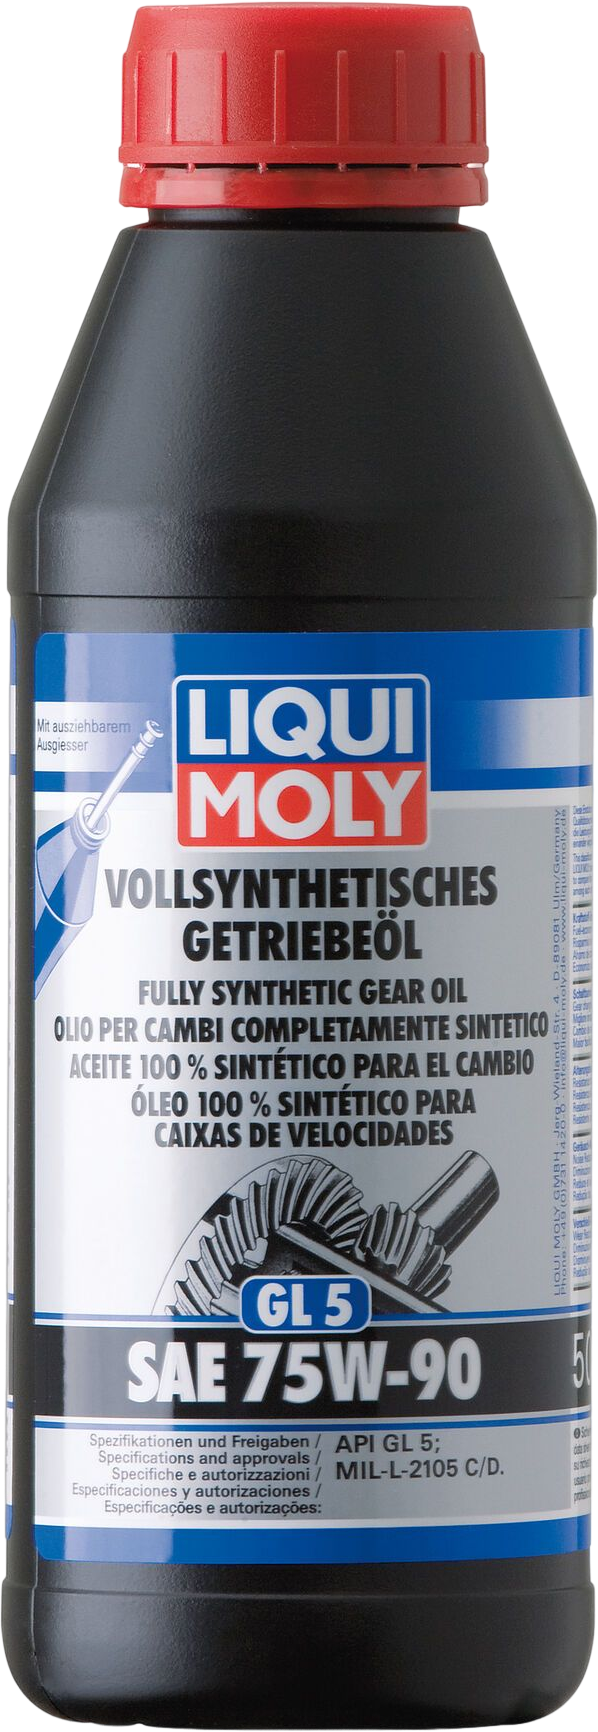 Liqui Moly Volsynthetische transmissieolie (GL5) SAE 75W-90, 500 ml